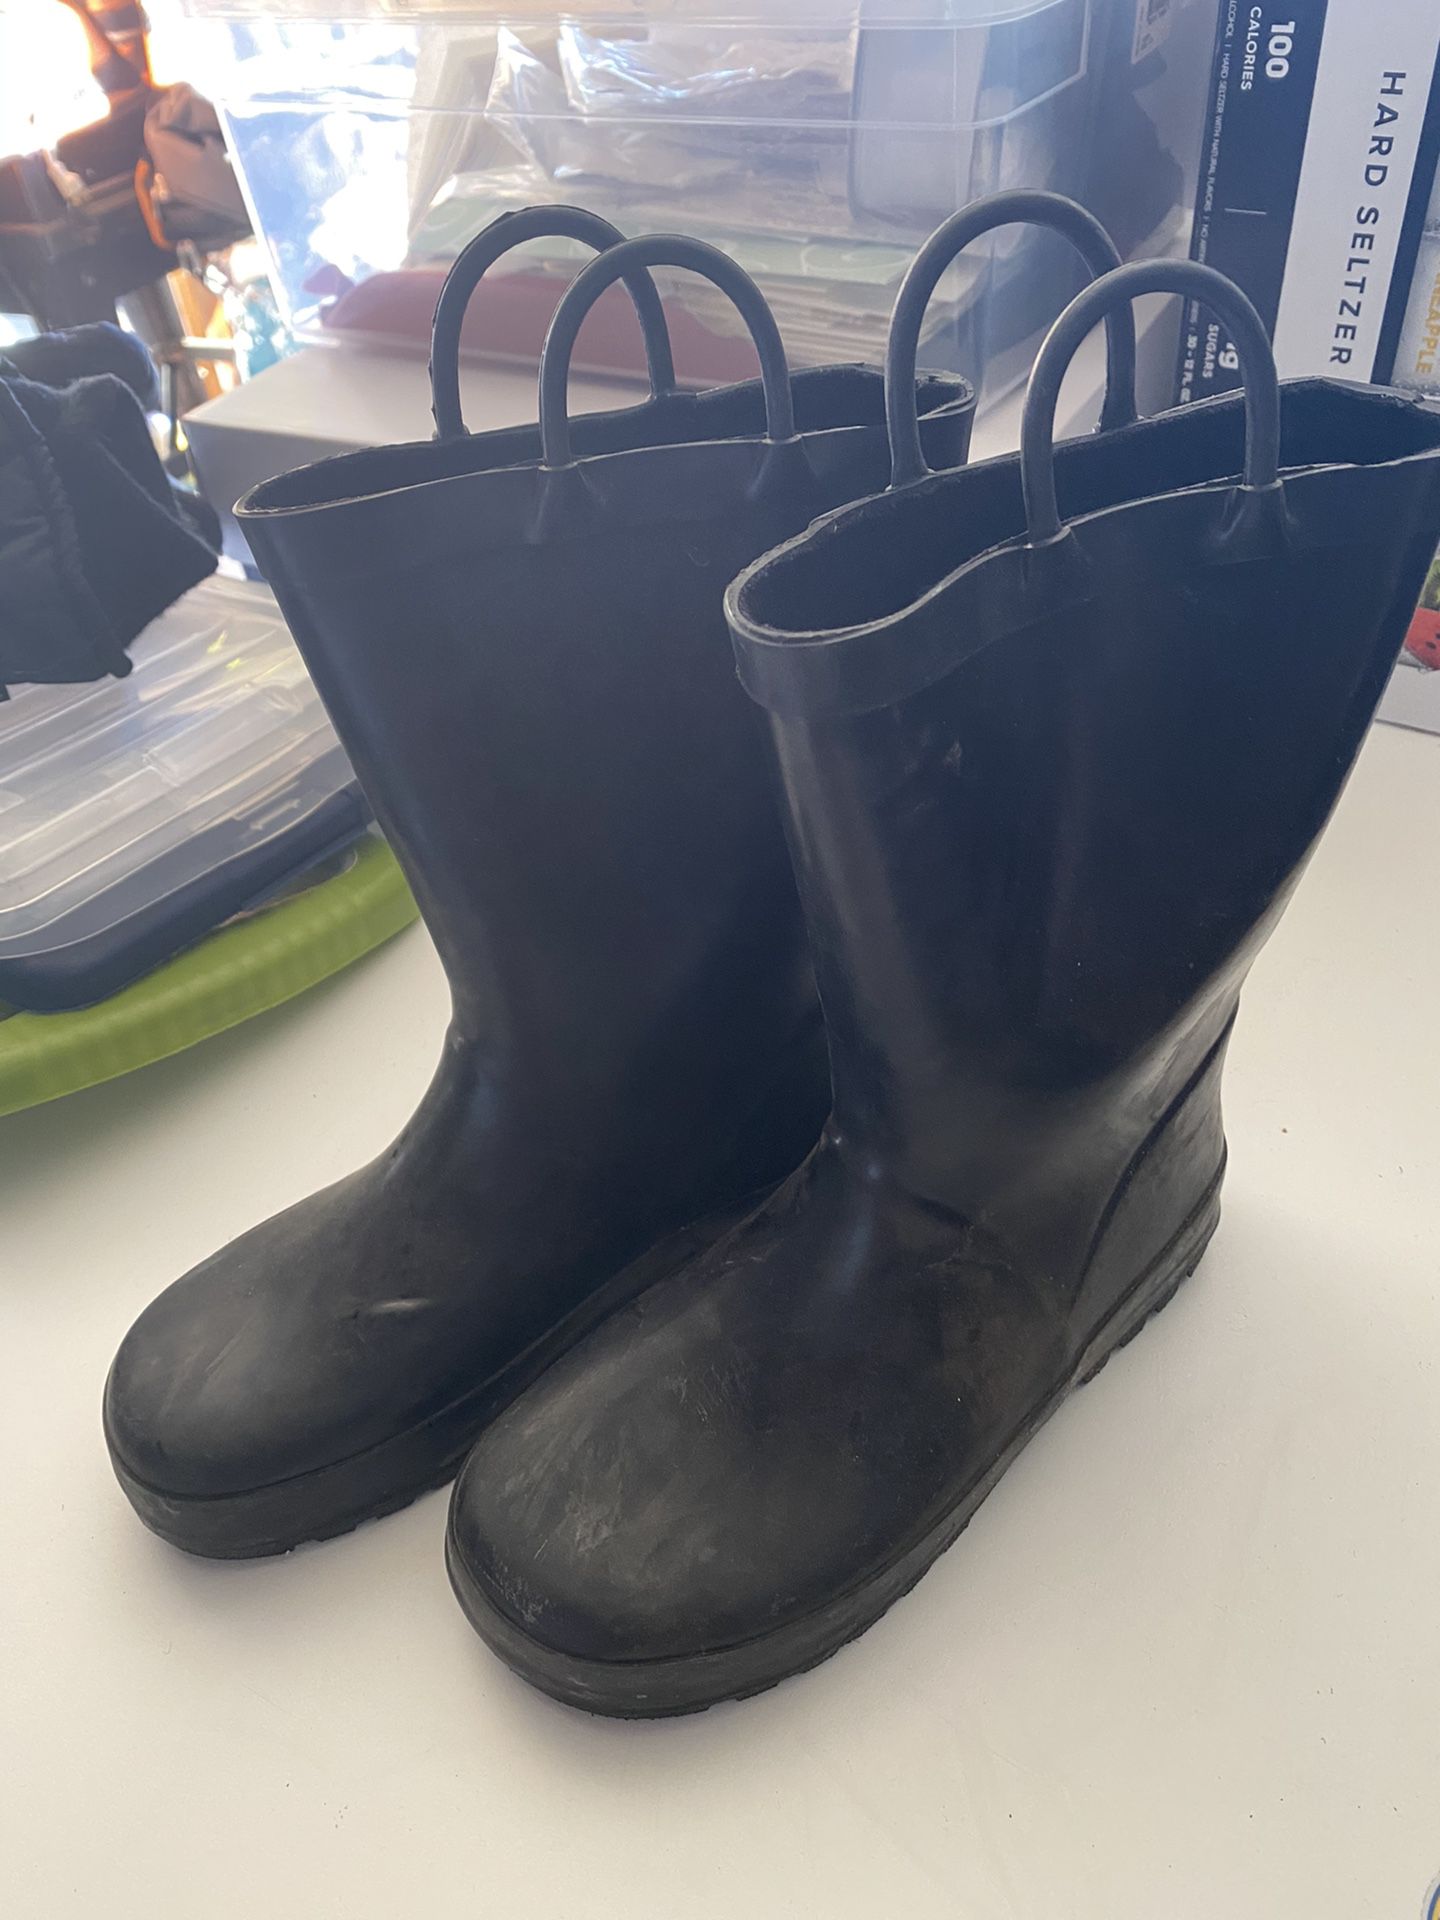 Size 2 Kids Rain Boots